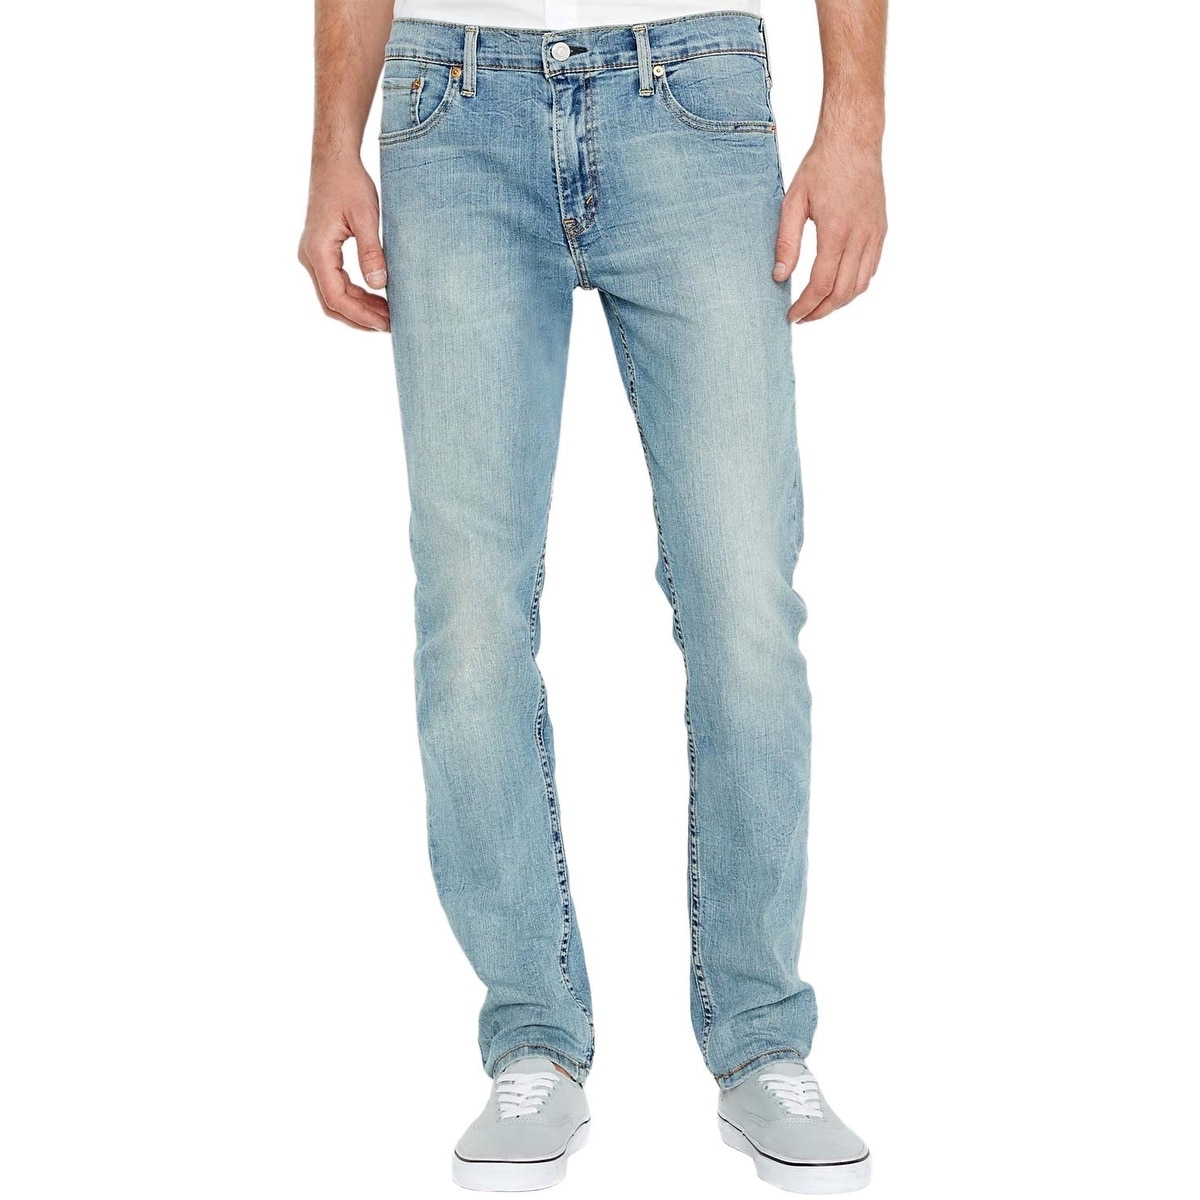 levi's 511 light blue jeans